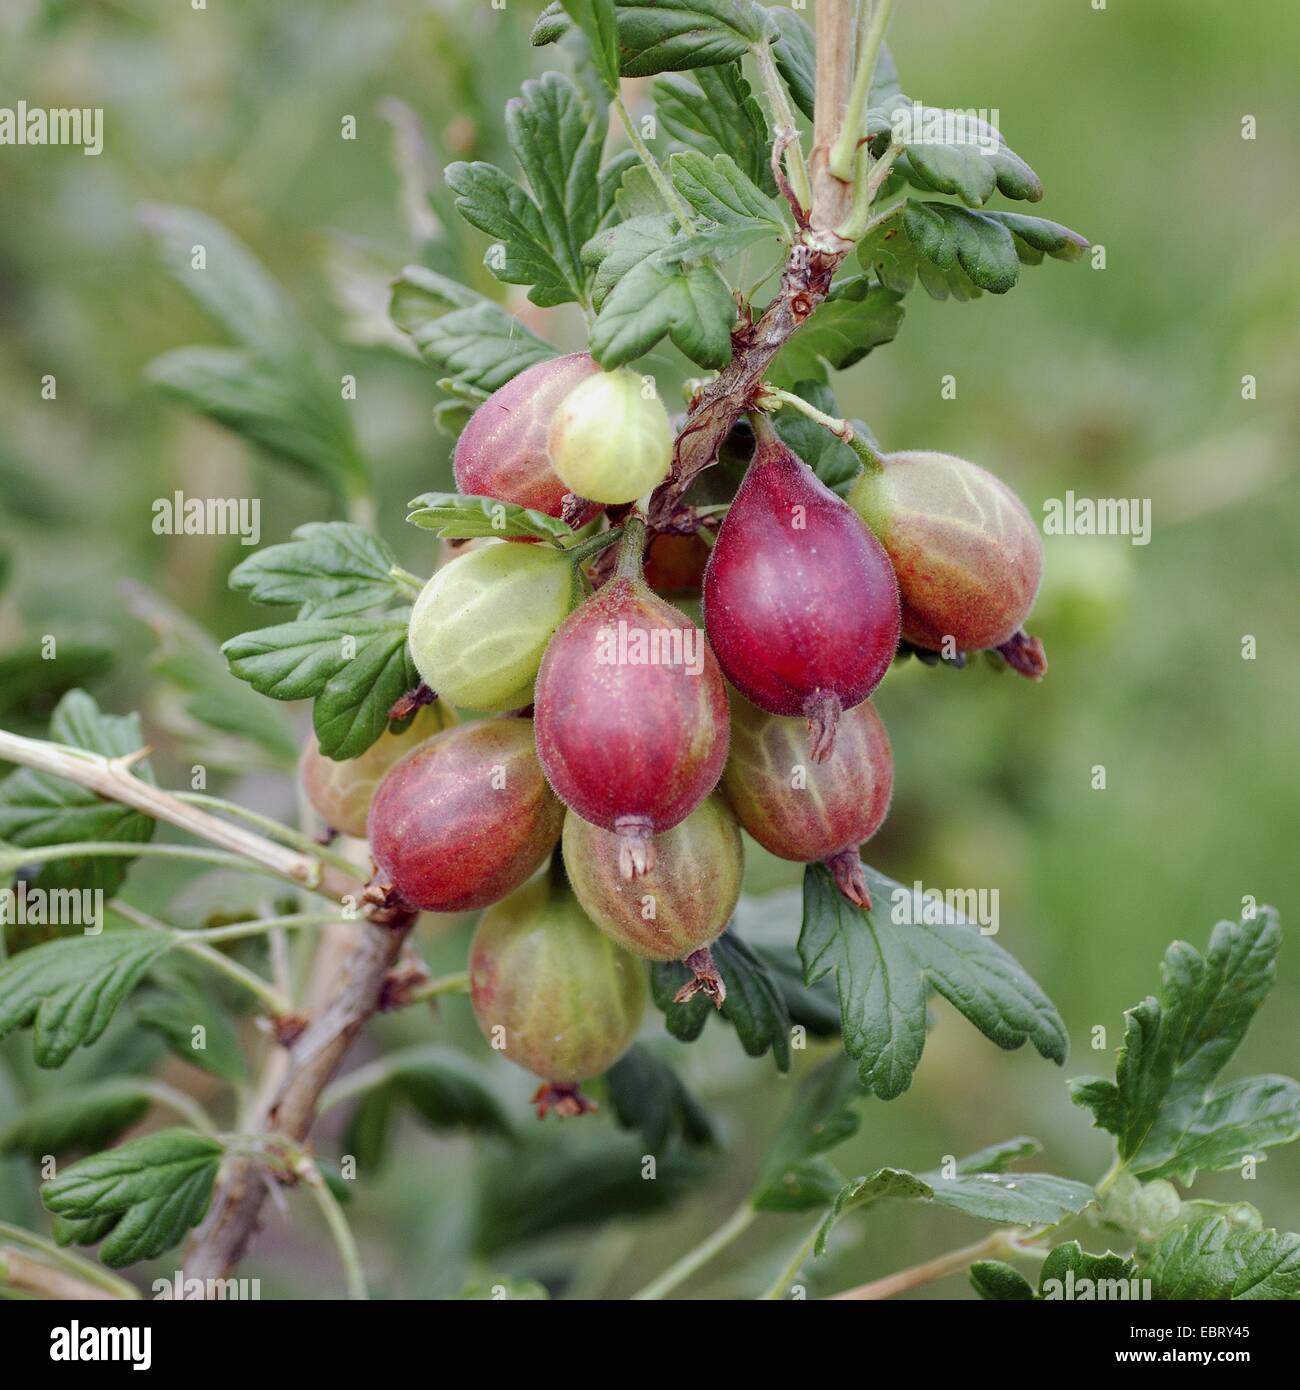 wilde Stachelbeere, europäischen Stachelbeere (Ribes Uva-Crispa 'Rolonda', Ribes Uva-Crispa Rolonda), rote Stachelbeere, Sorte Rolonda Stockfoto